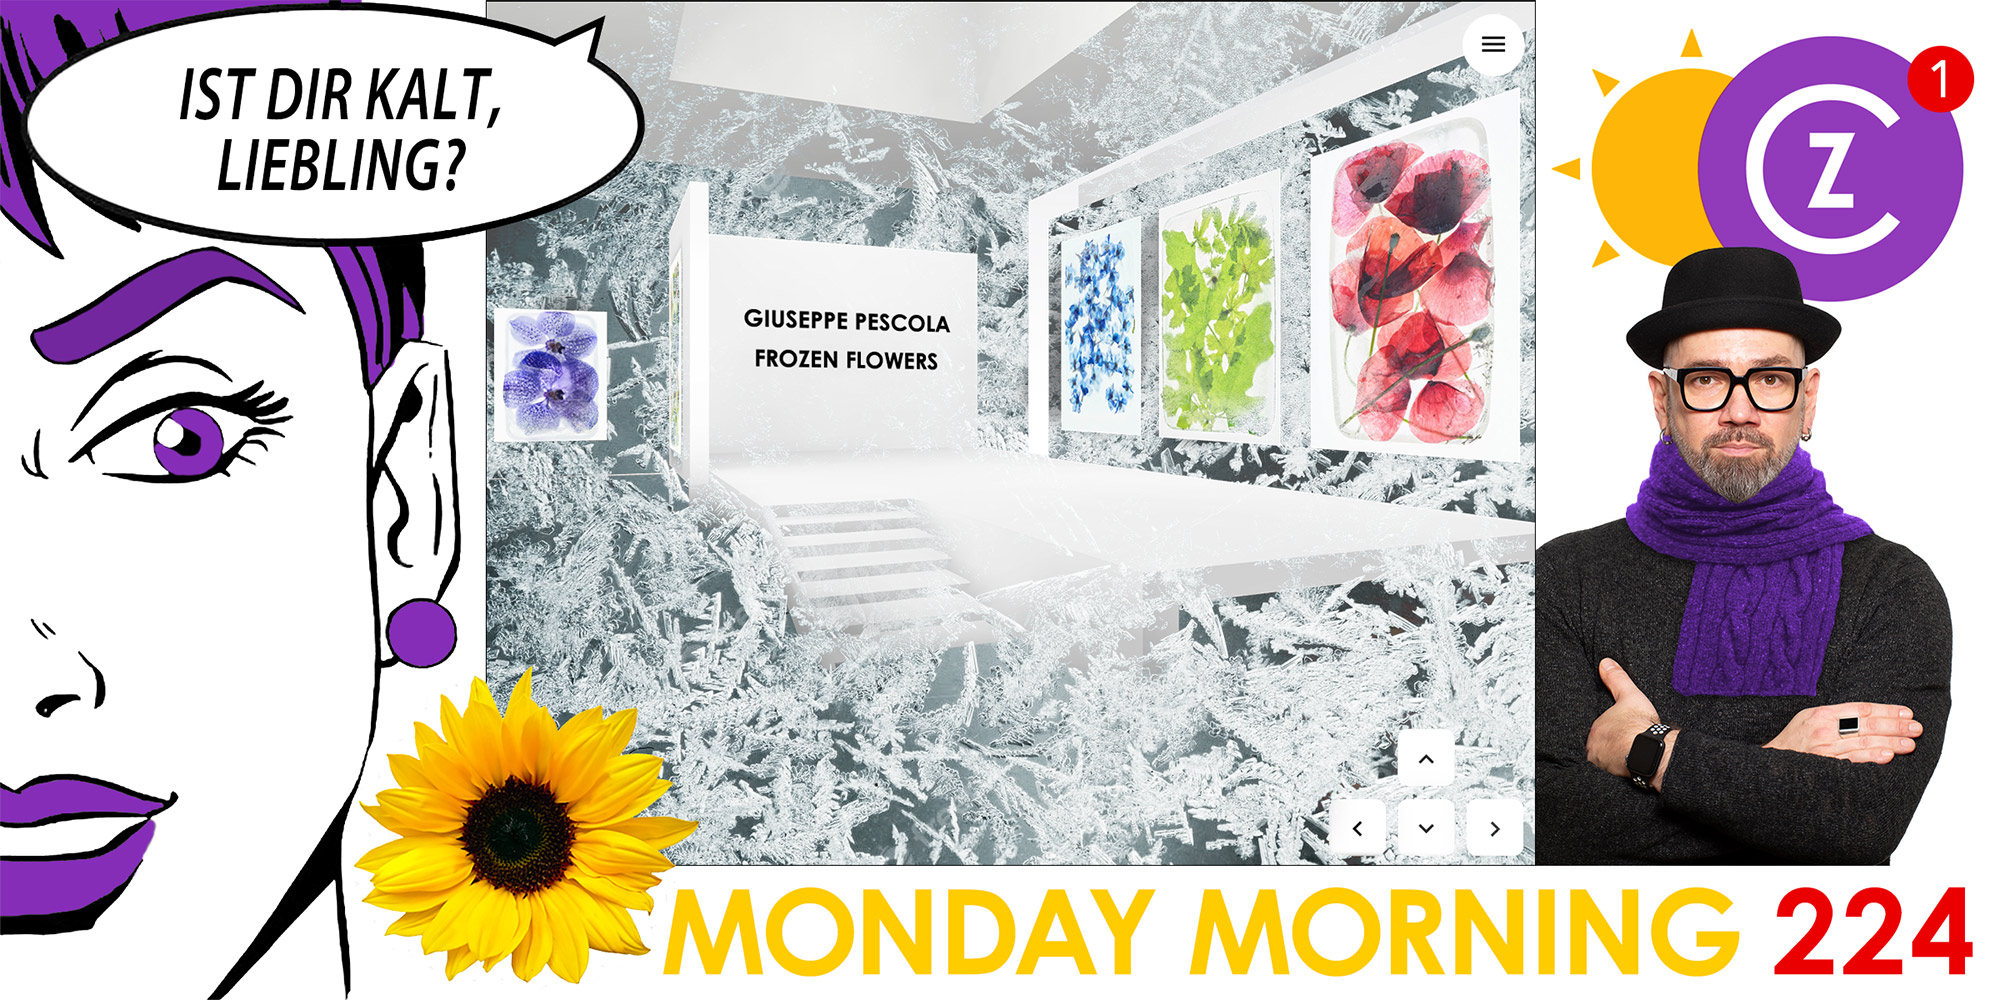 CAZALE fine art collection Newsletter Monday Morning 224 frozen flowers giuseppe pescola